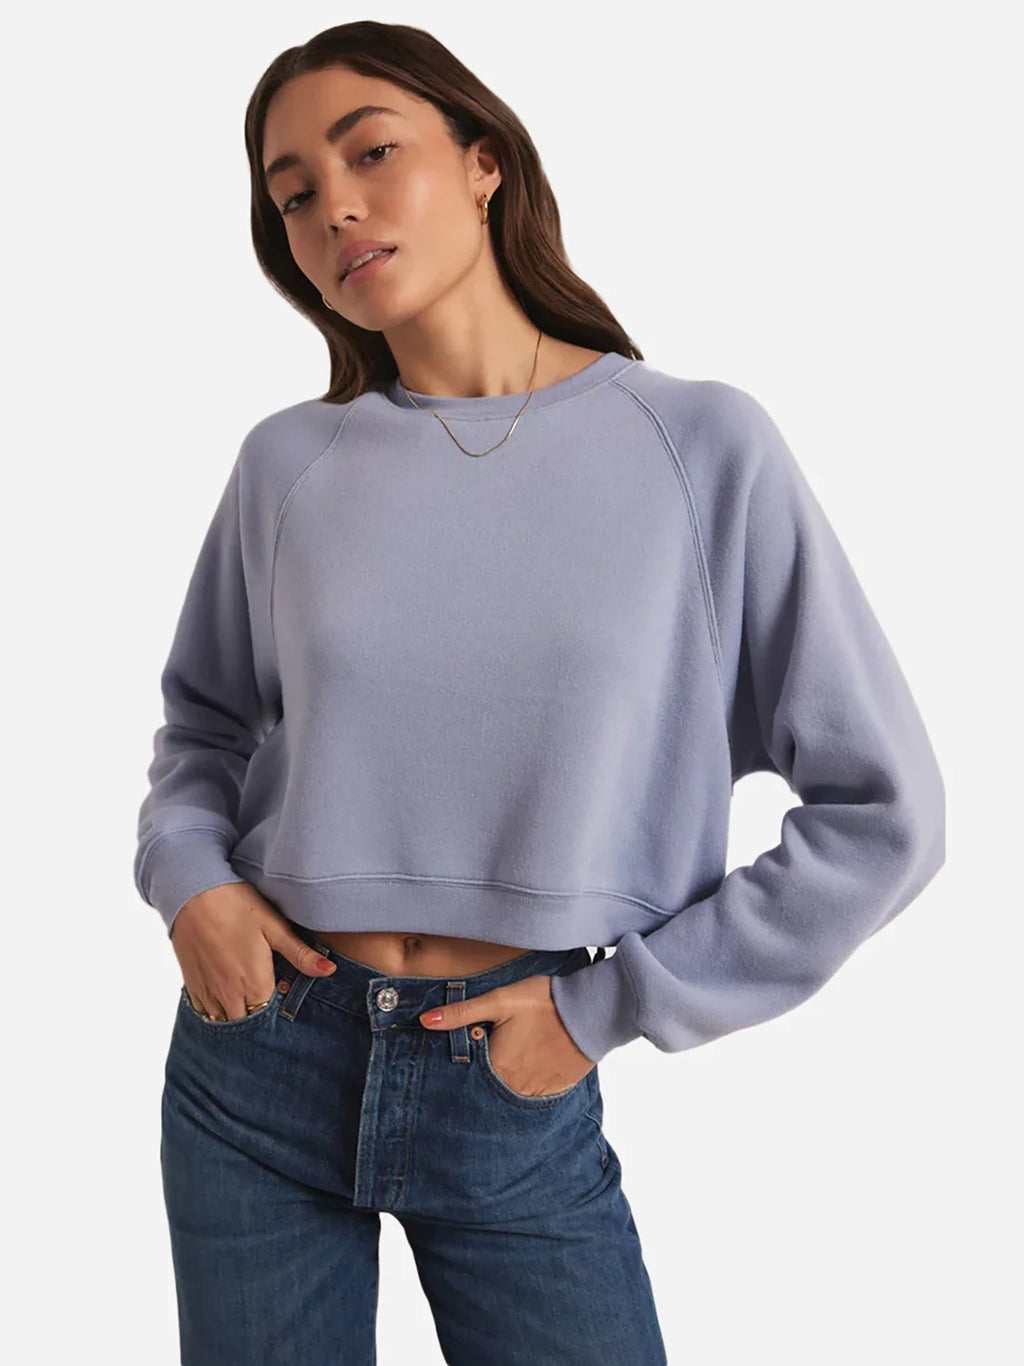 Z Supply Crop Out sweatshirt in stormy blue